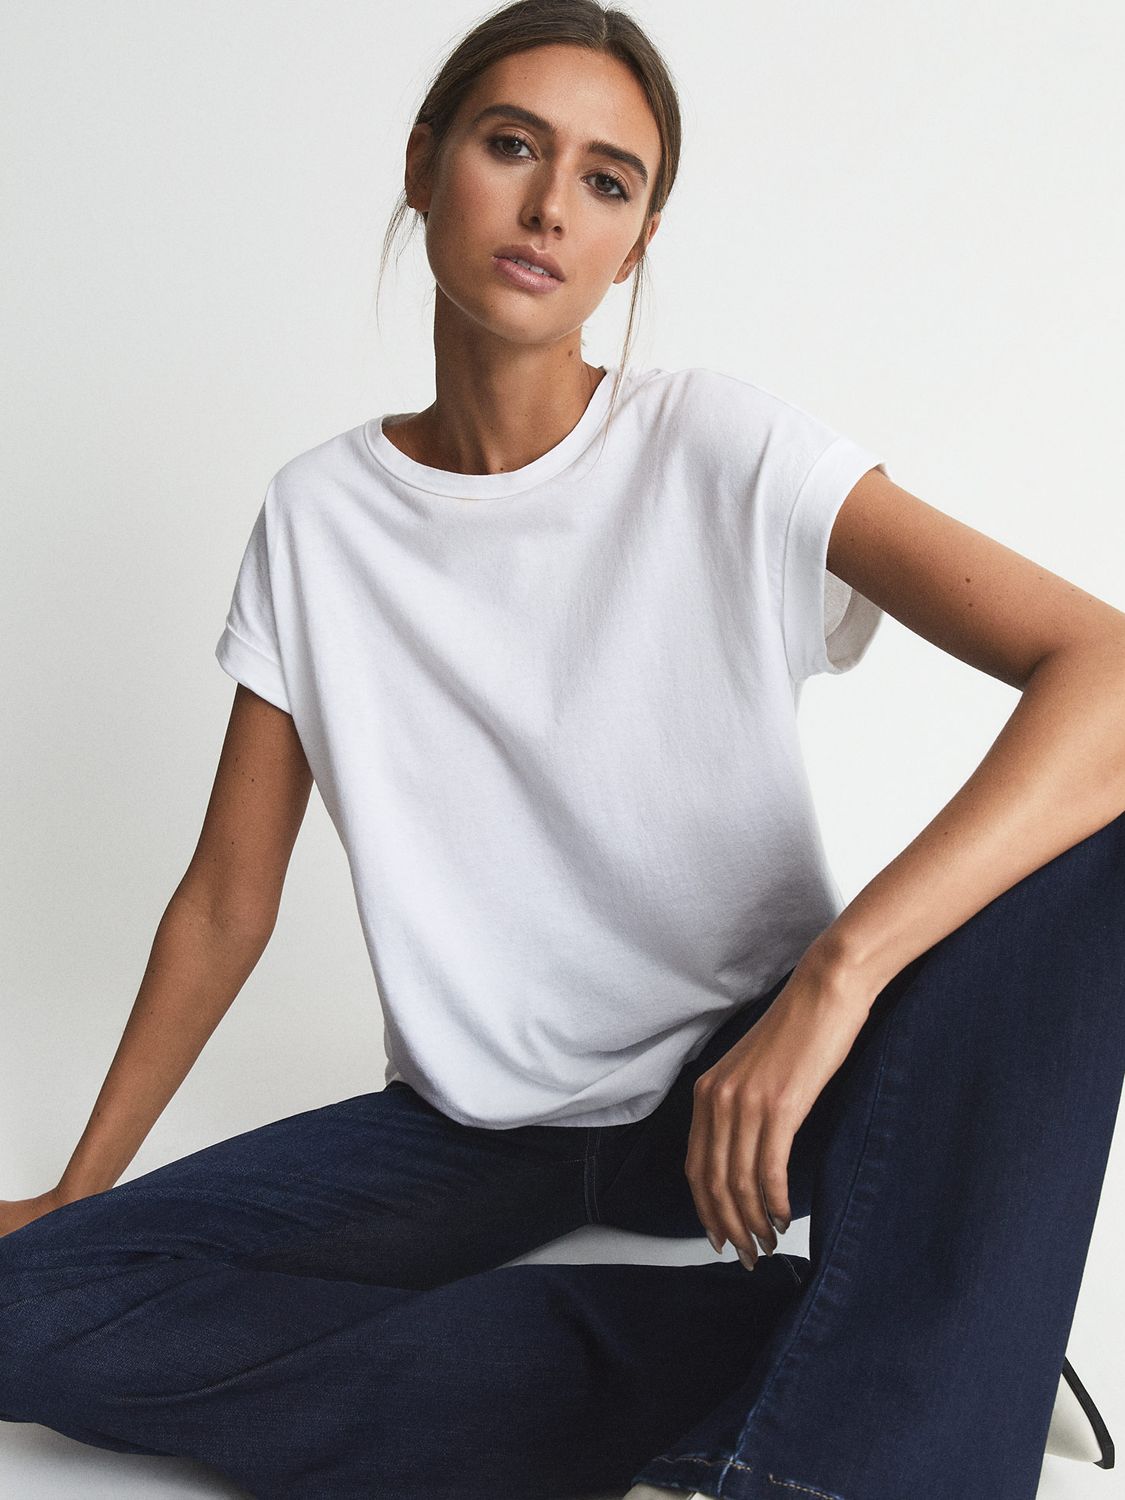 Reiss Tereza Cotton Jersey T-Shirt, White at John Lewis & Partners